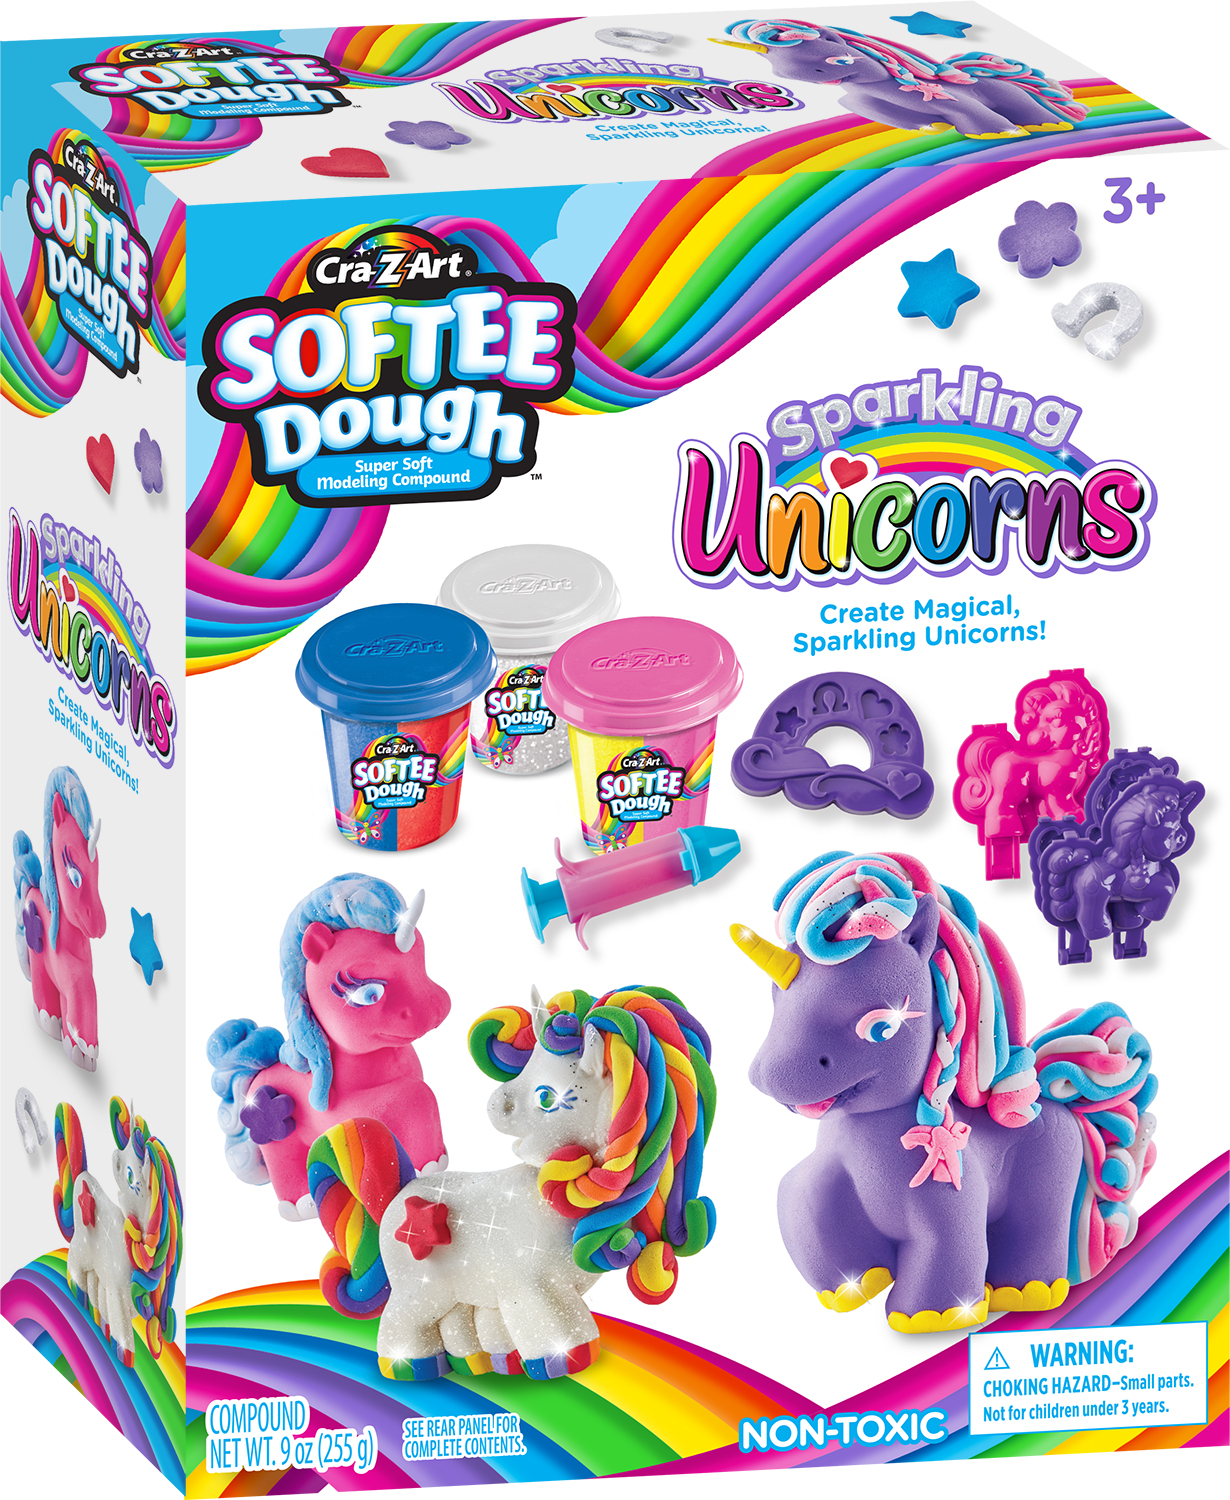 Cra-Z-Art Softee Dough Sparkling Unicorns Modeling Compound Play Set - image 3 of 9